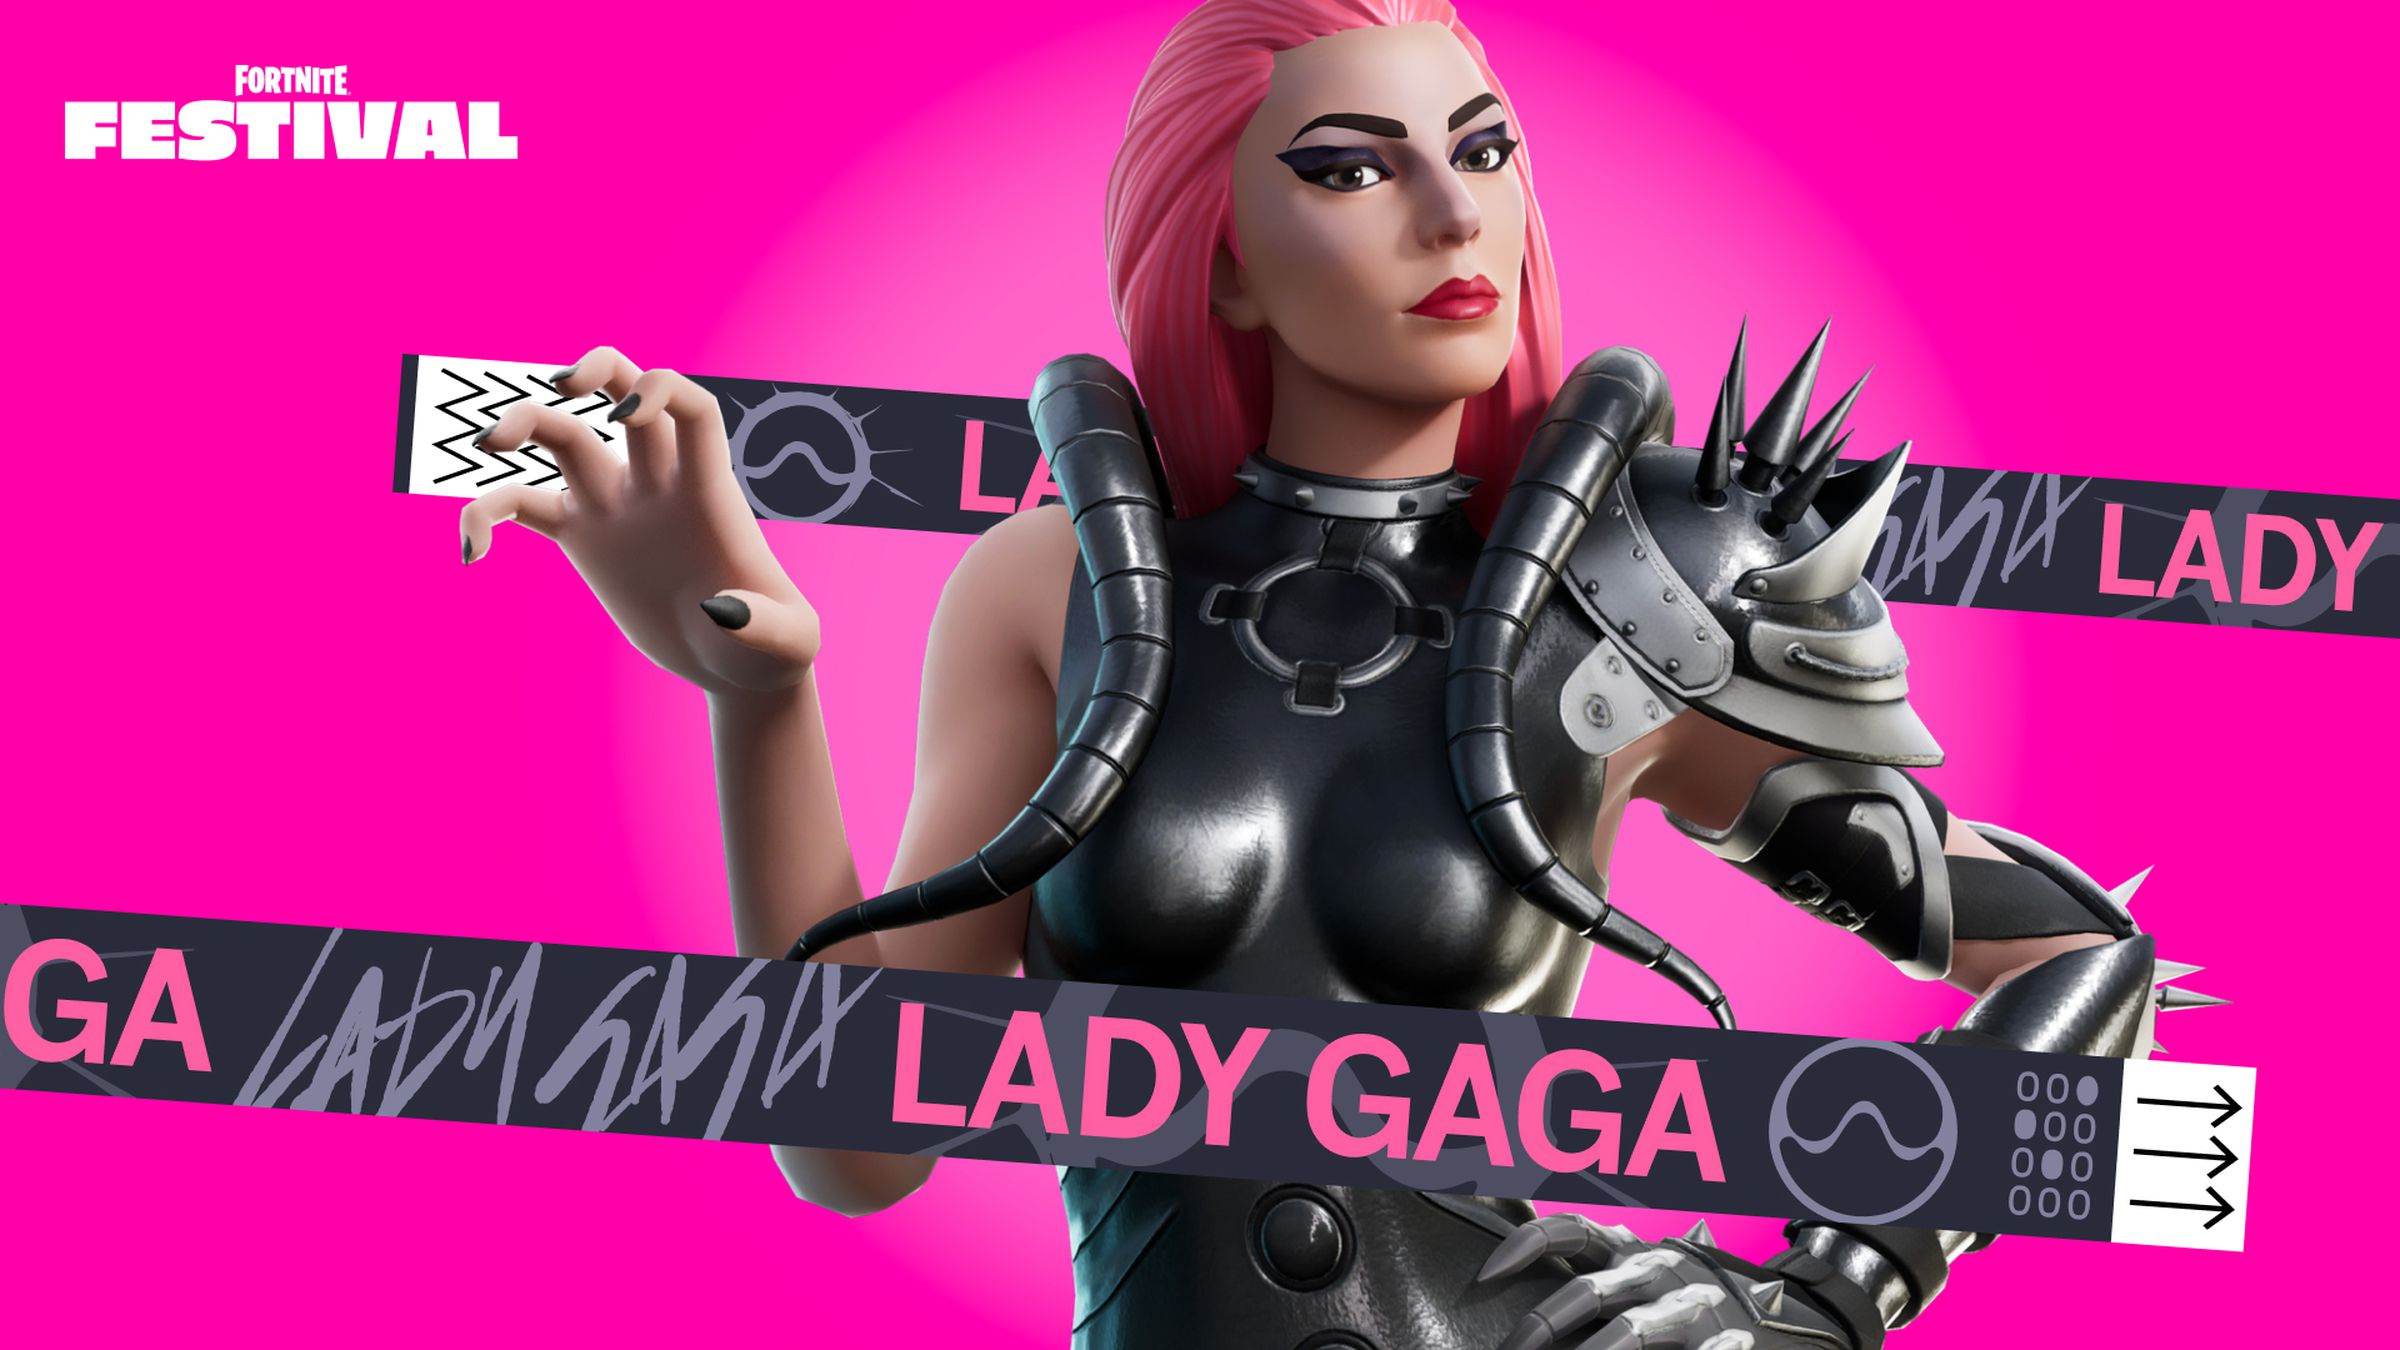 Lady Gaga in Fortnite.